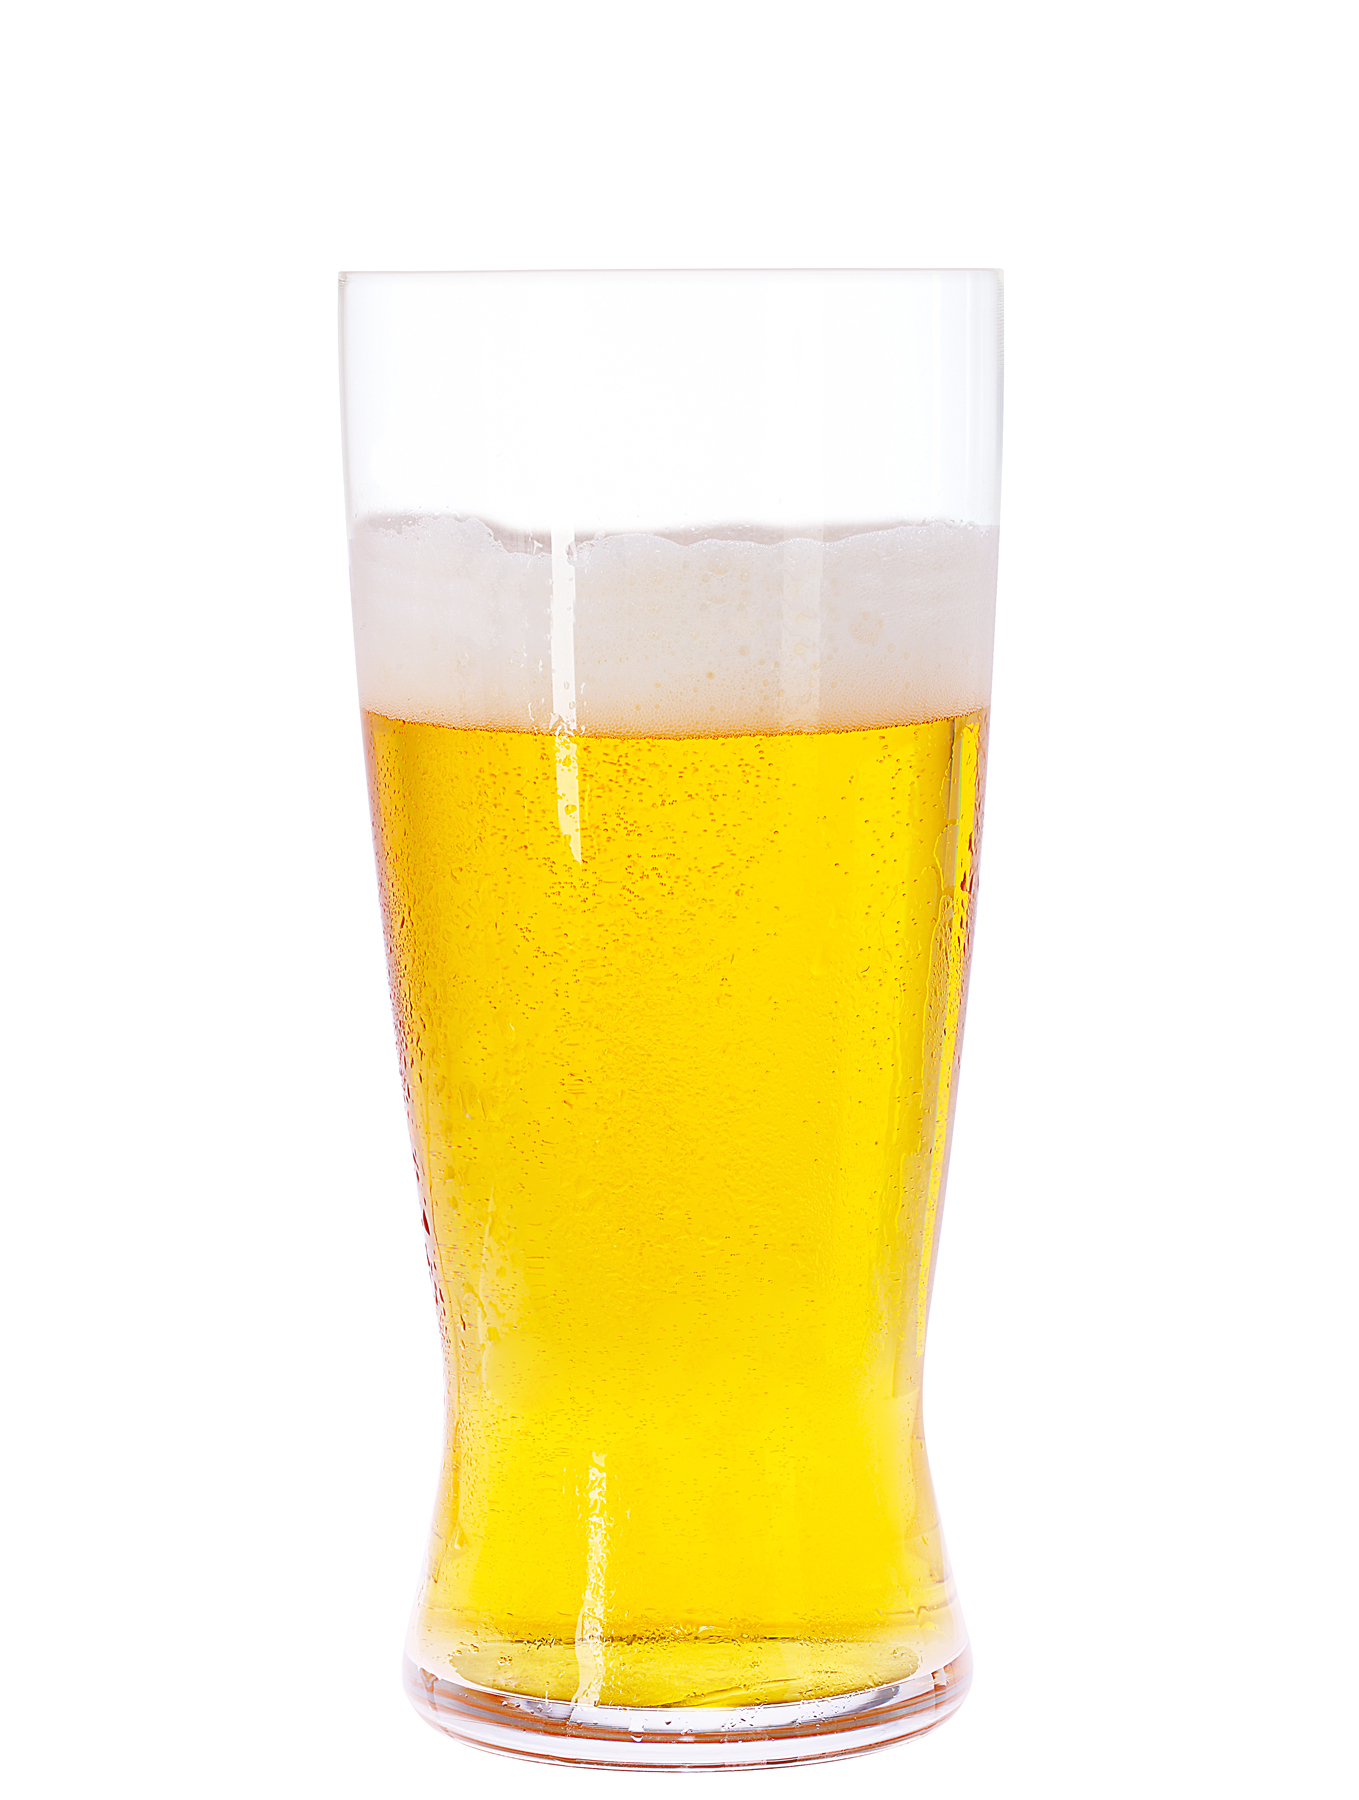 Lagerbierglas Beer Classics, Spiegelau - 630ml (1 Stk.)